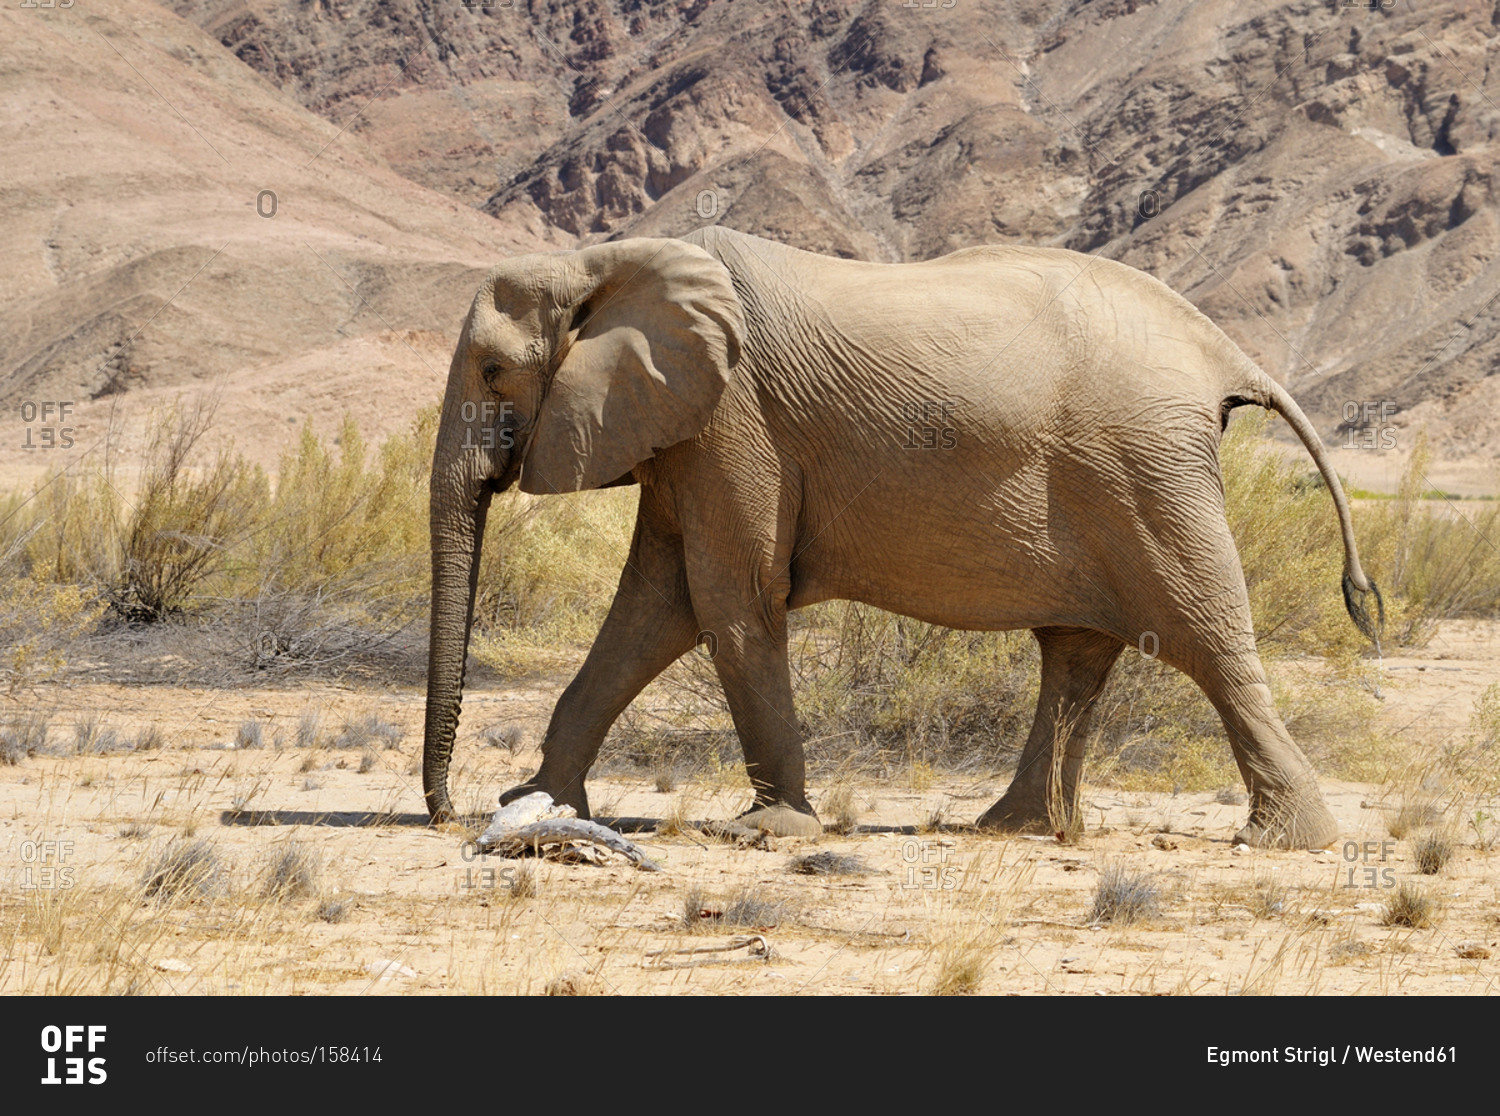 Cow of rare Namibian desert elephant, Loxodonta africana, at Hoanib River